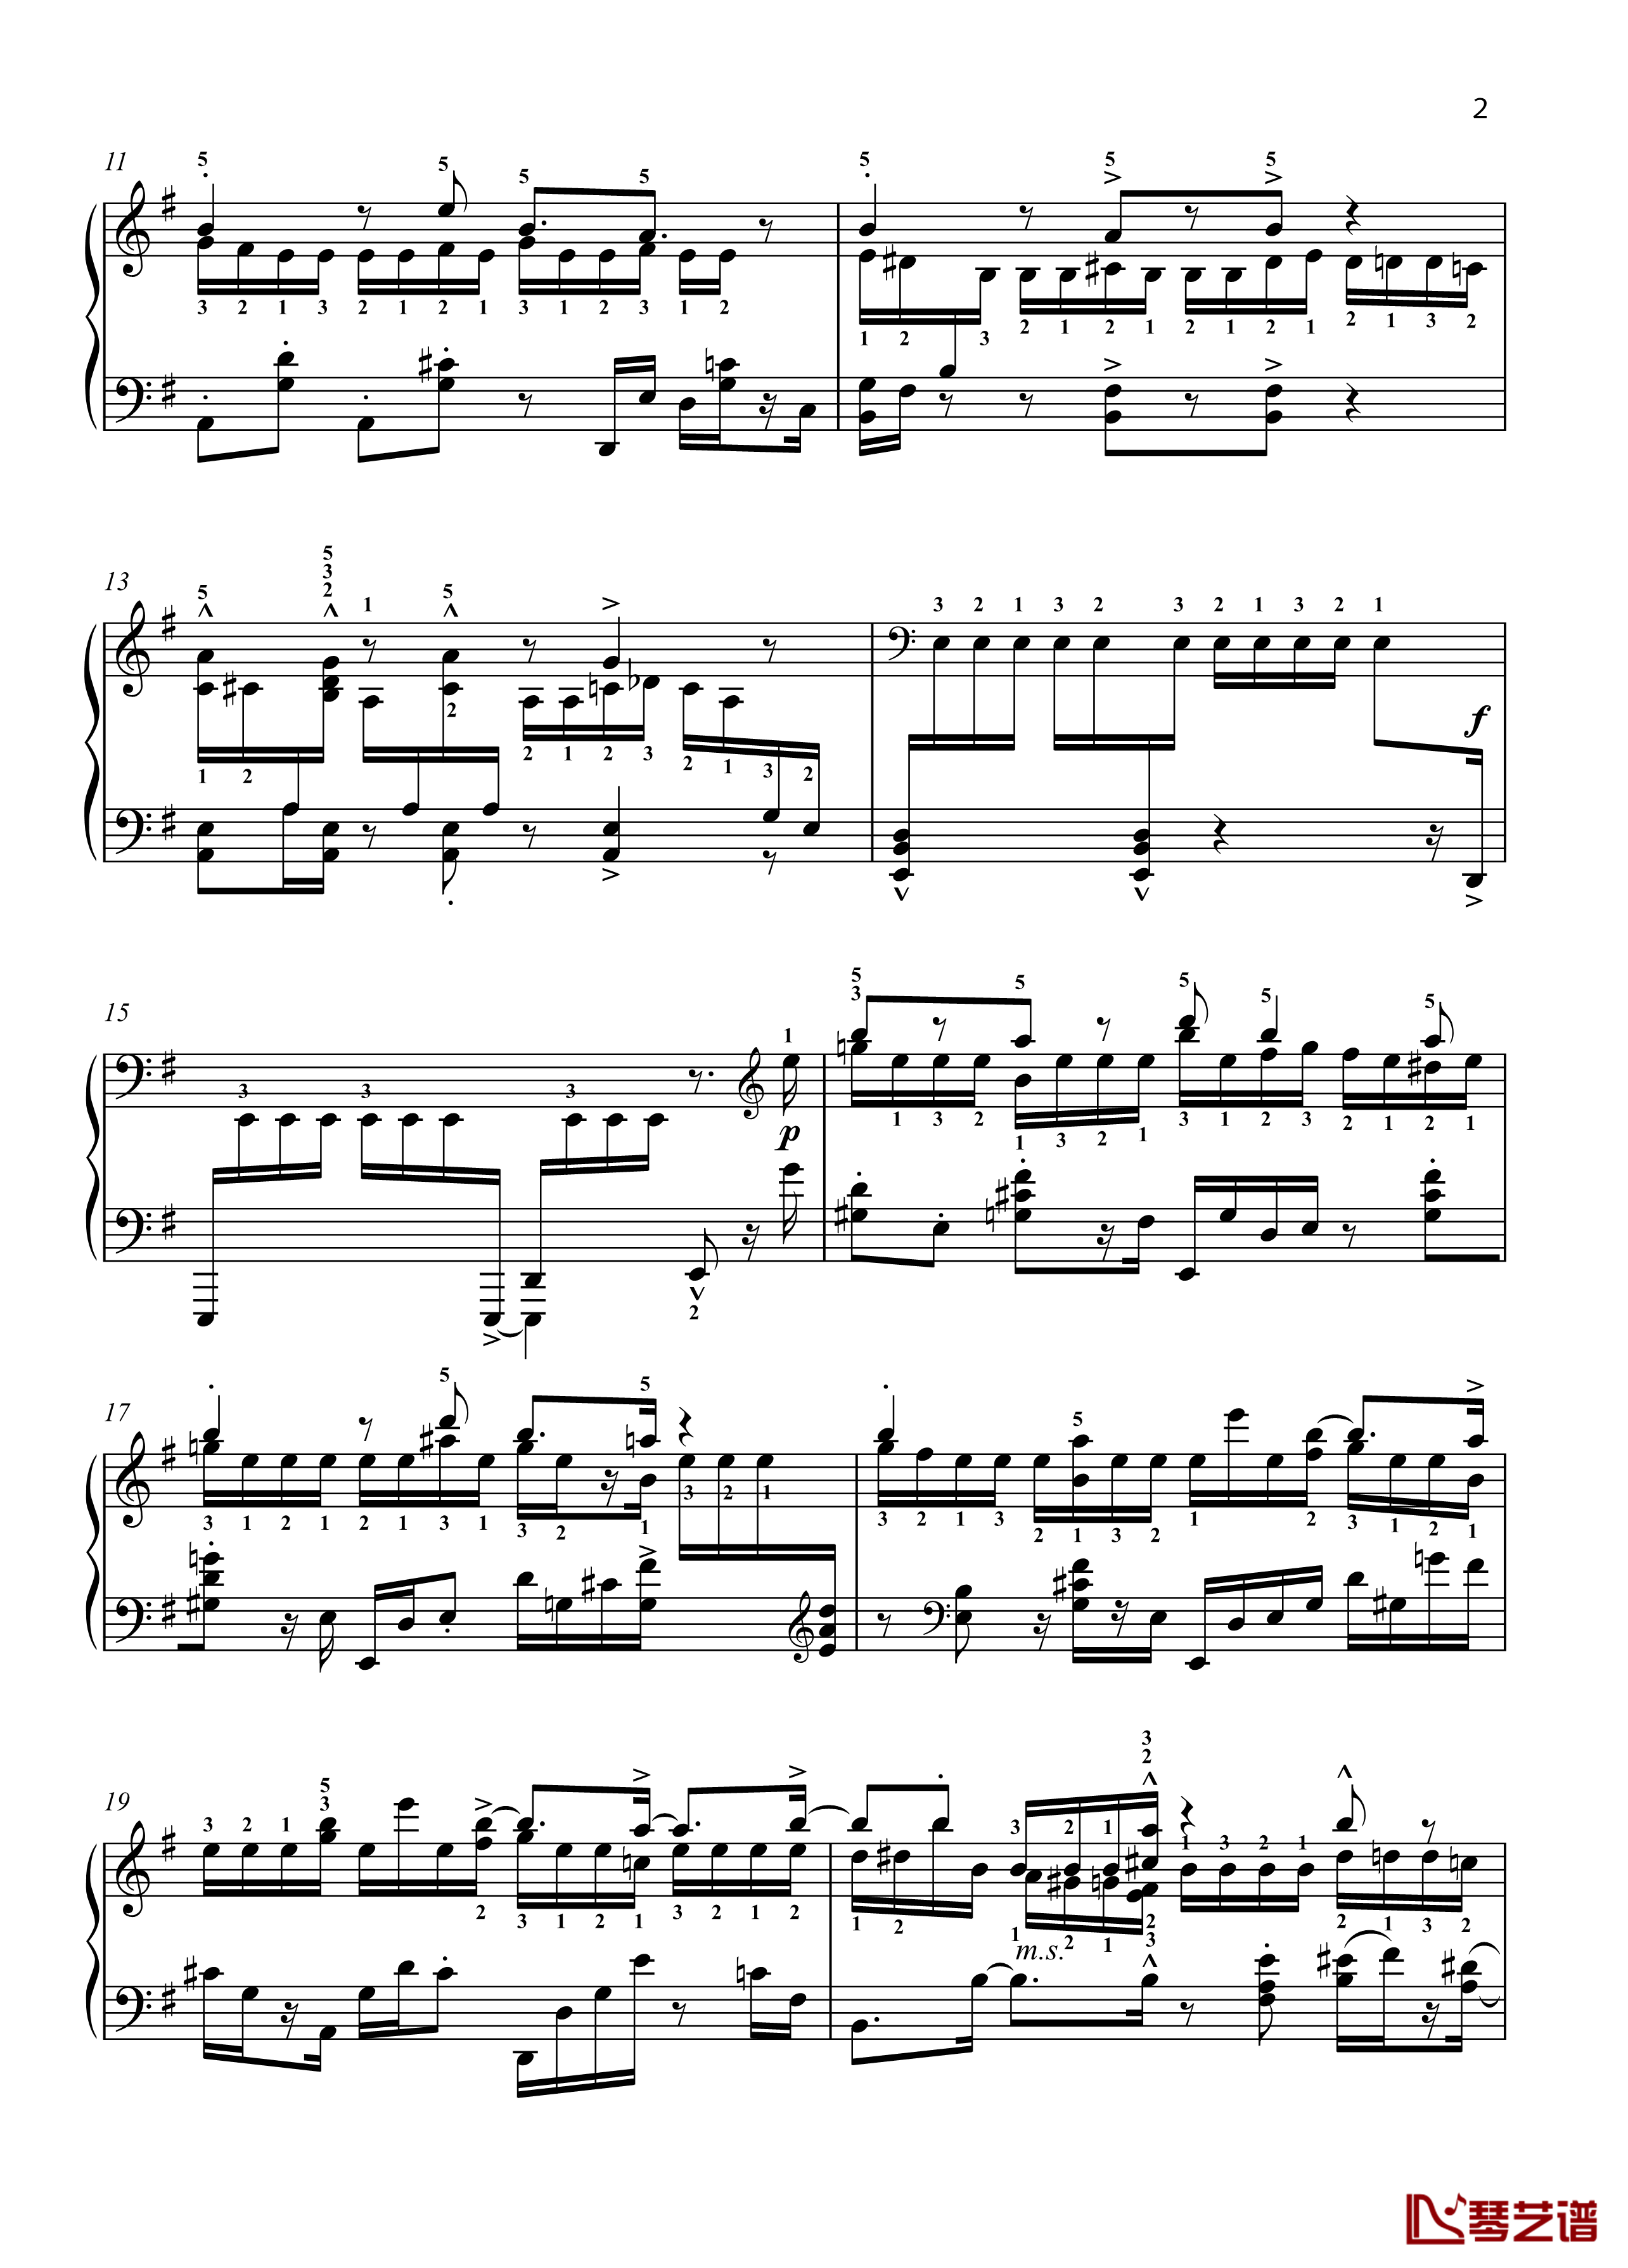 No. 3. Toccatina钢琴谱-带指法-八首音乐会练习曲 Eight Concert ?tudes Op 40-爵士-尼古拉·凯帕斯汀